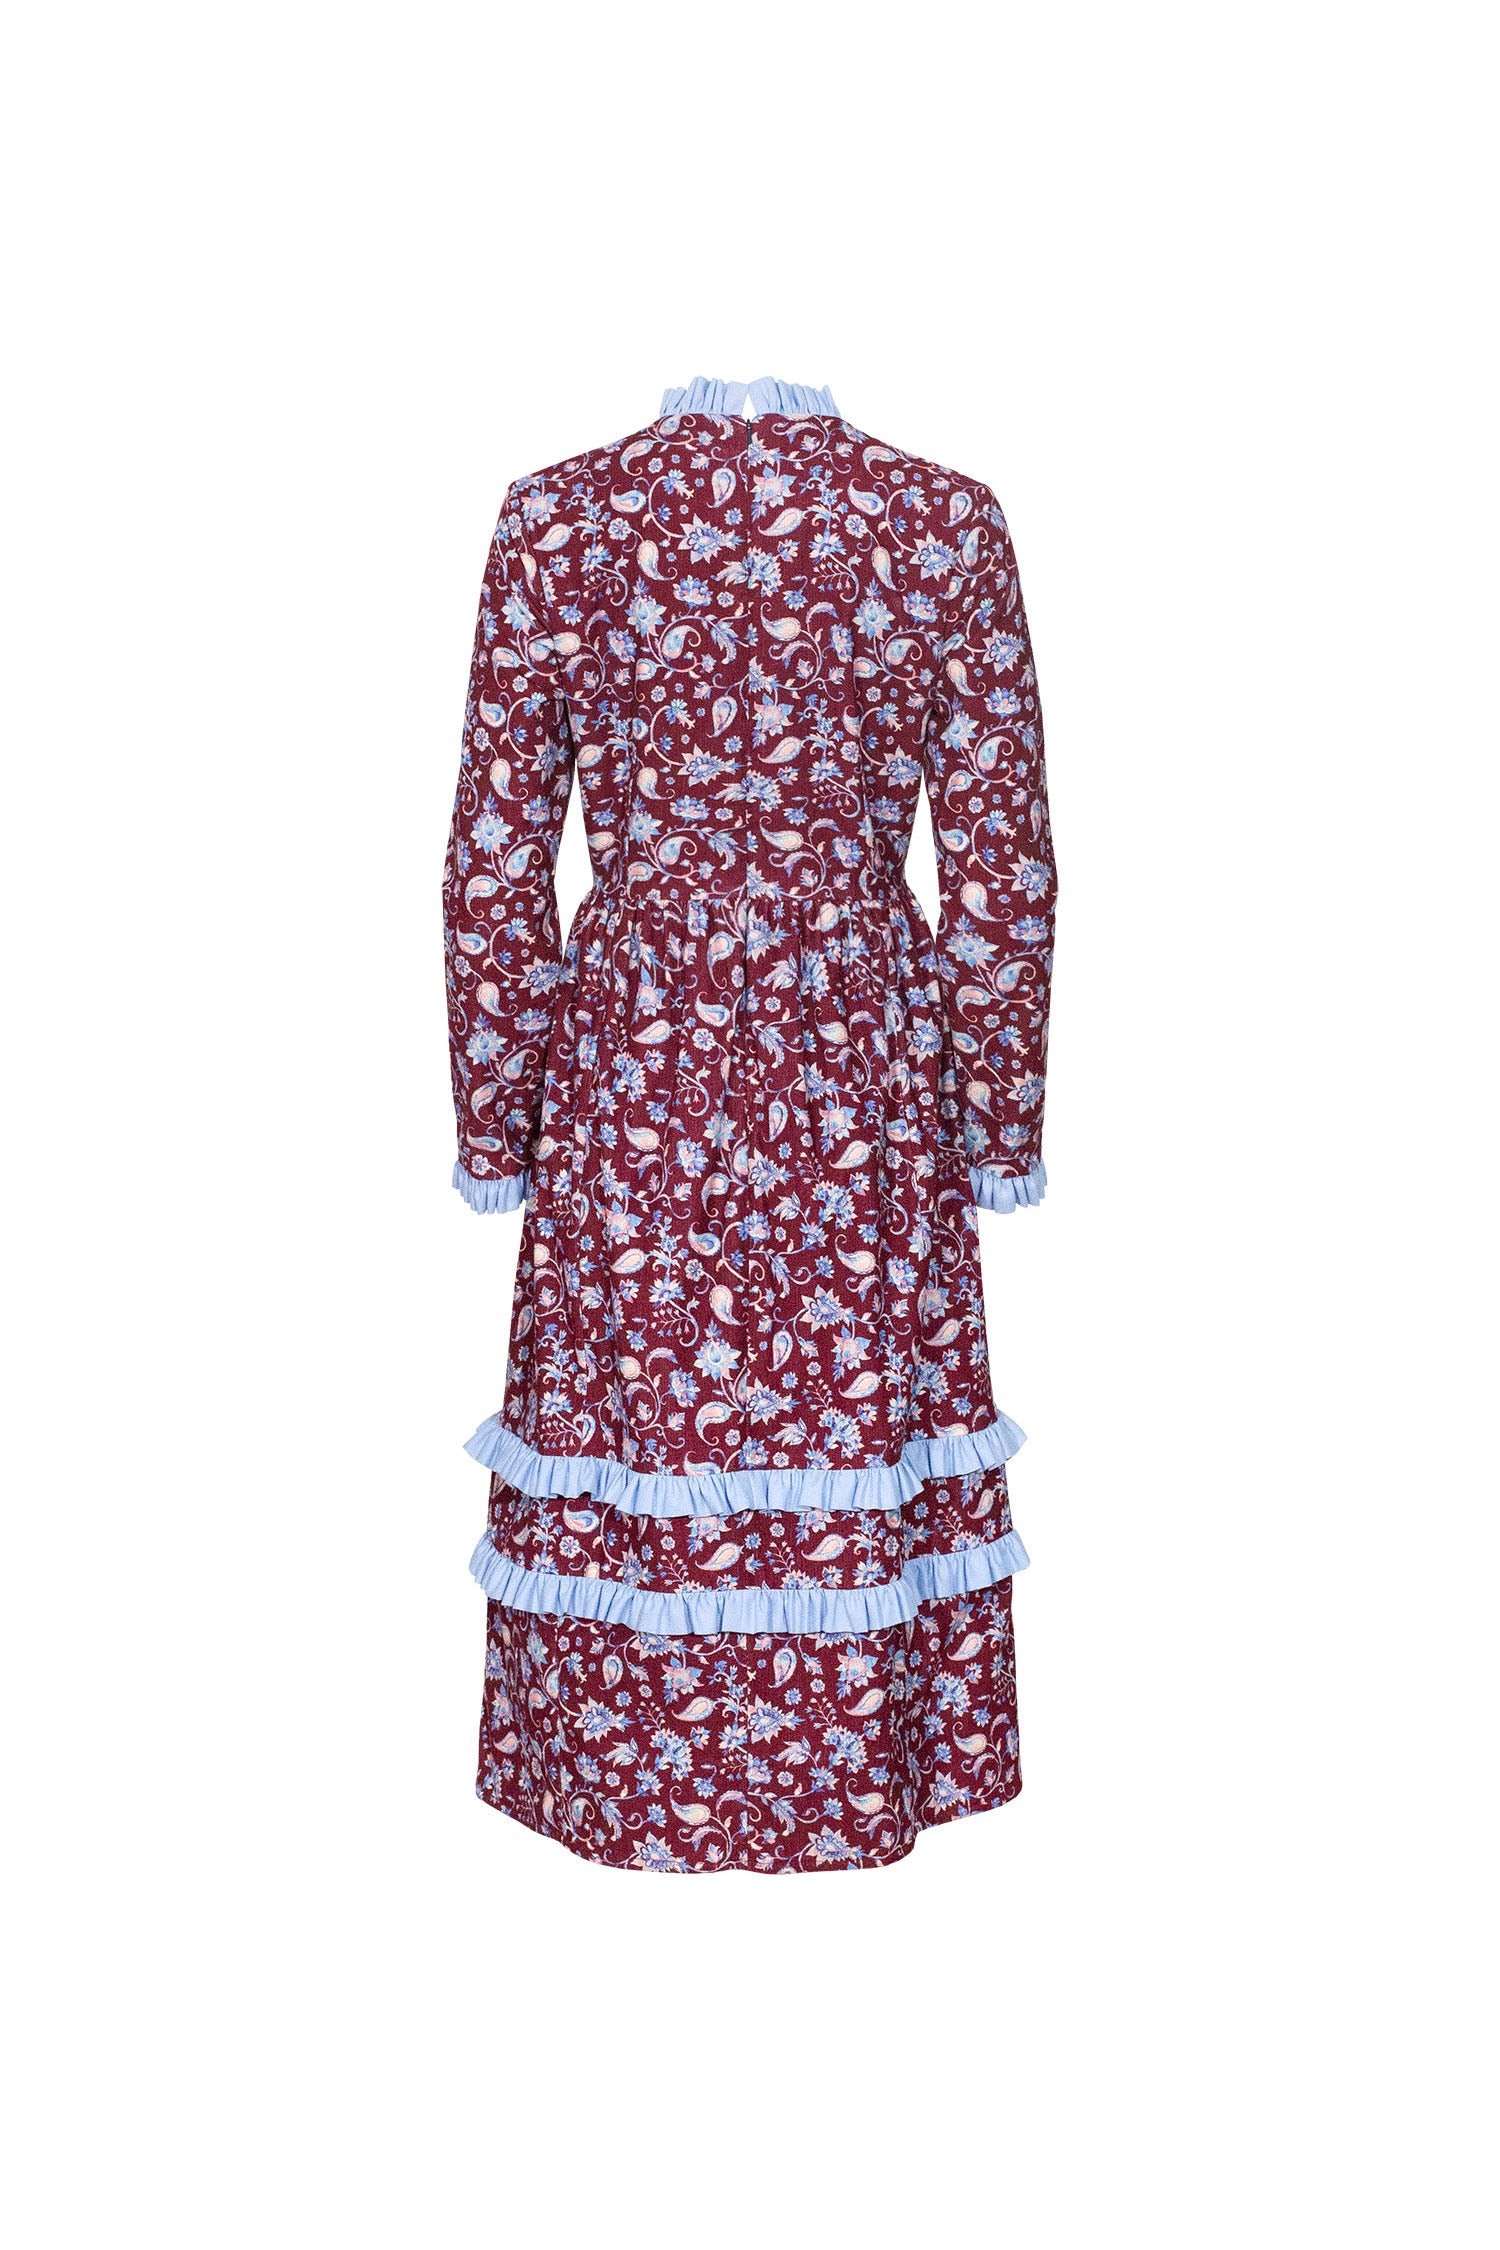 Padma dress - burgundy needlecord